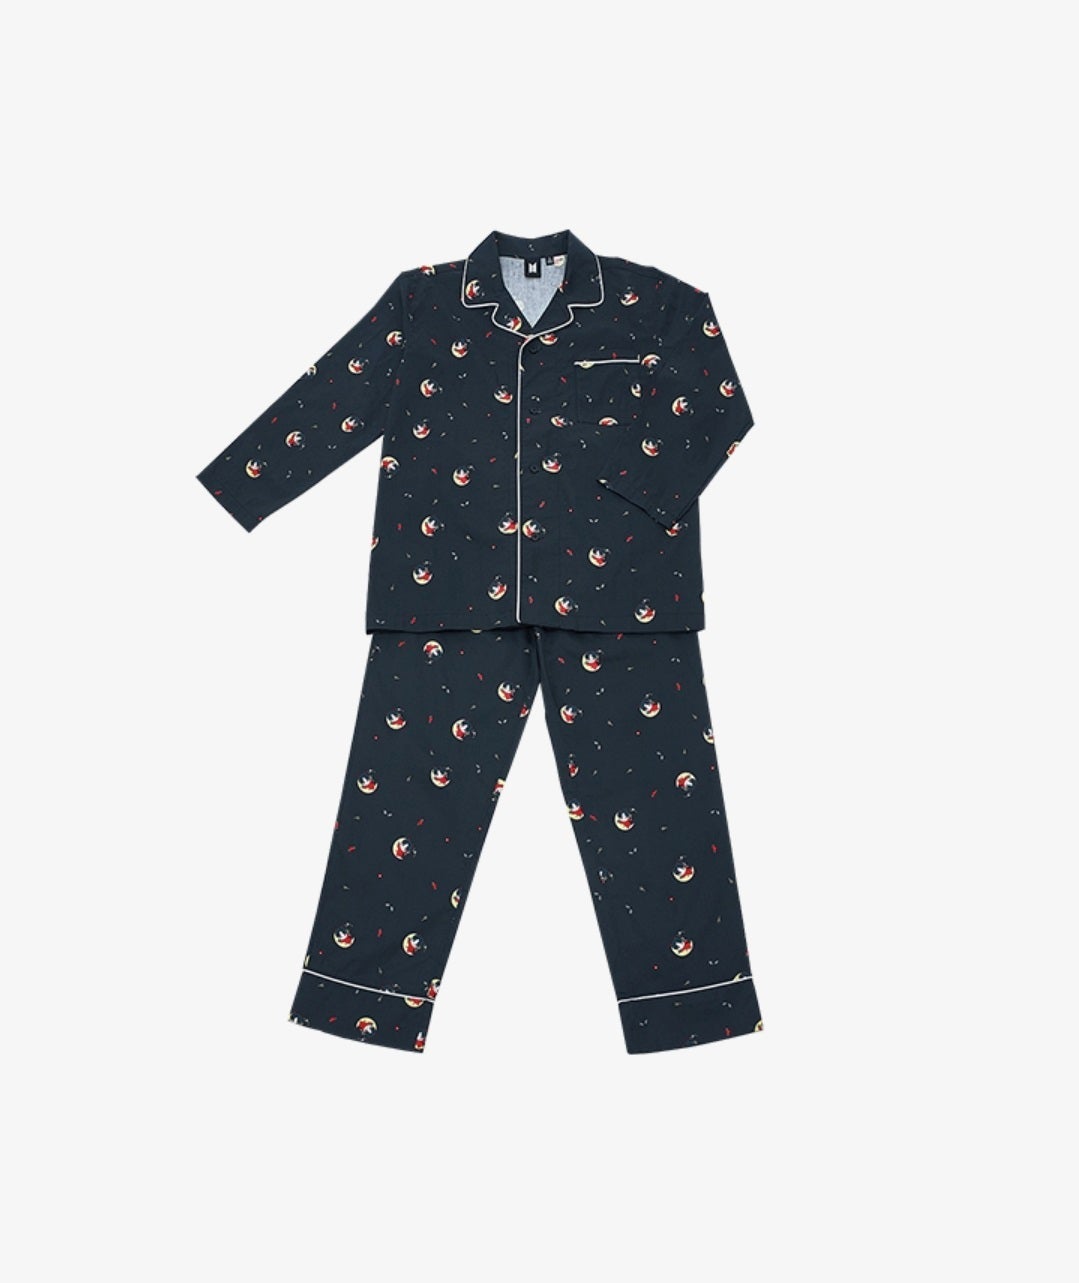 Super Soft and Cute Louis Vuitton Pajamas Set. 